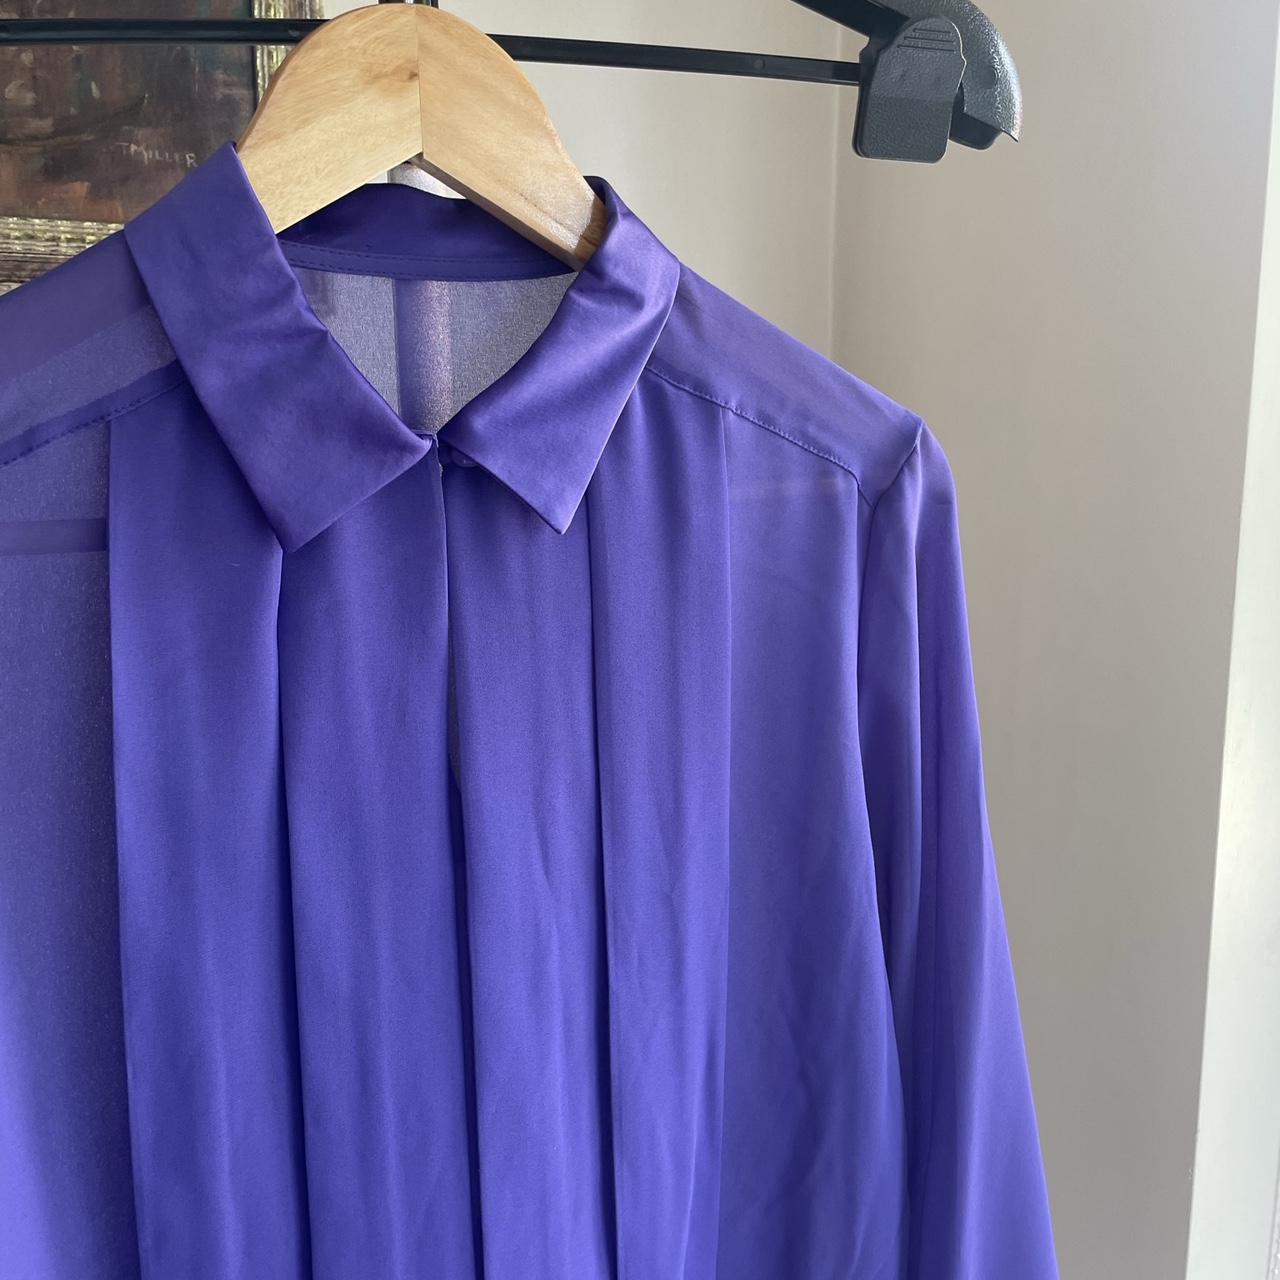 Genuine Vintage late 80s bright purple shirt 💜🍇 ... - Depop